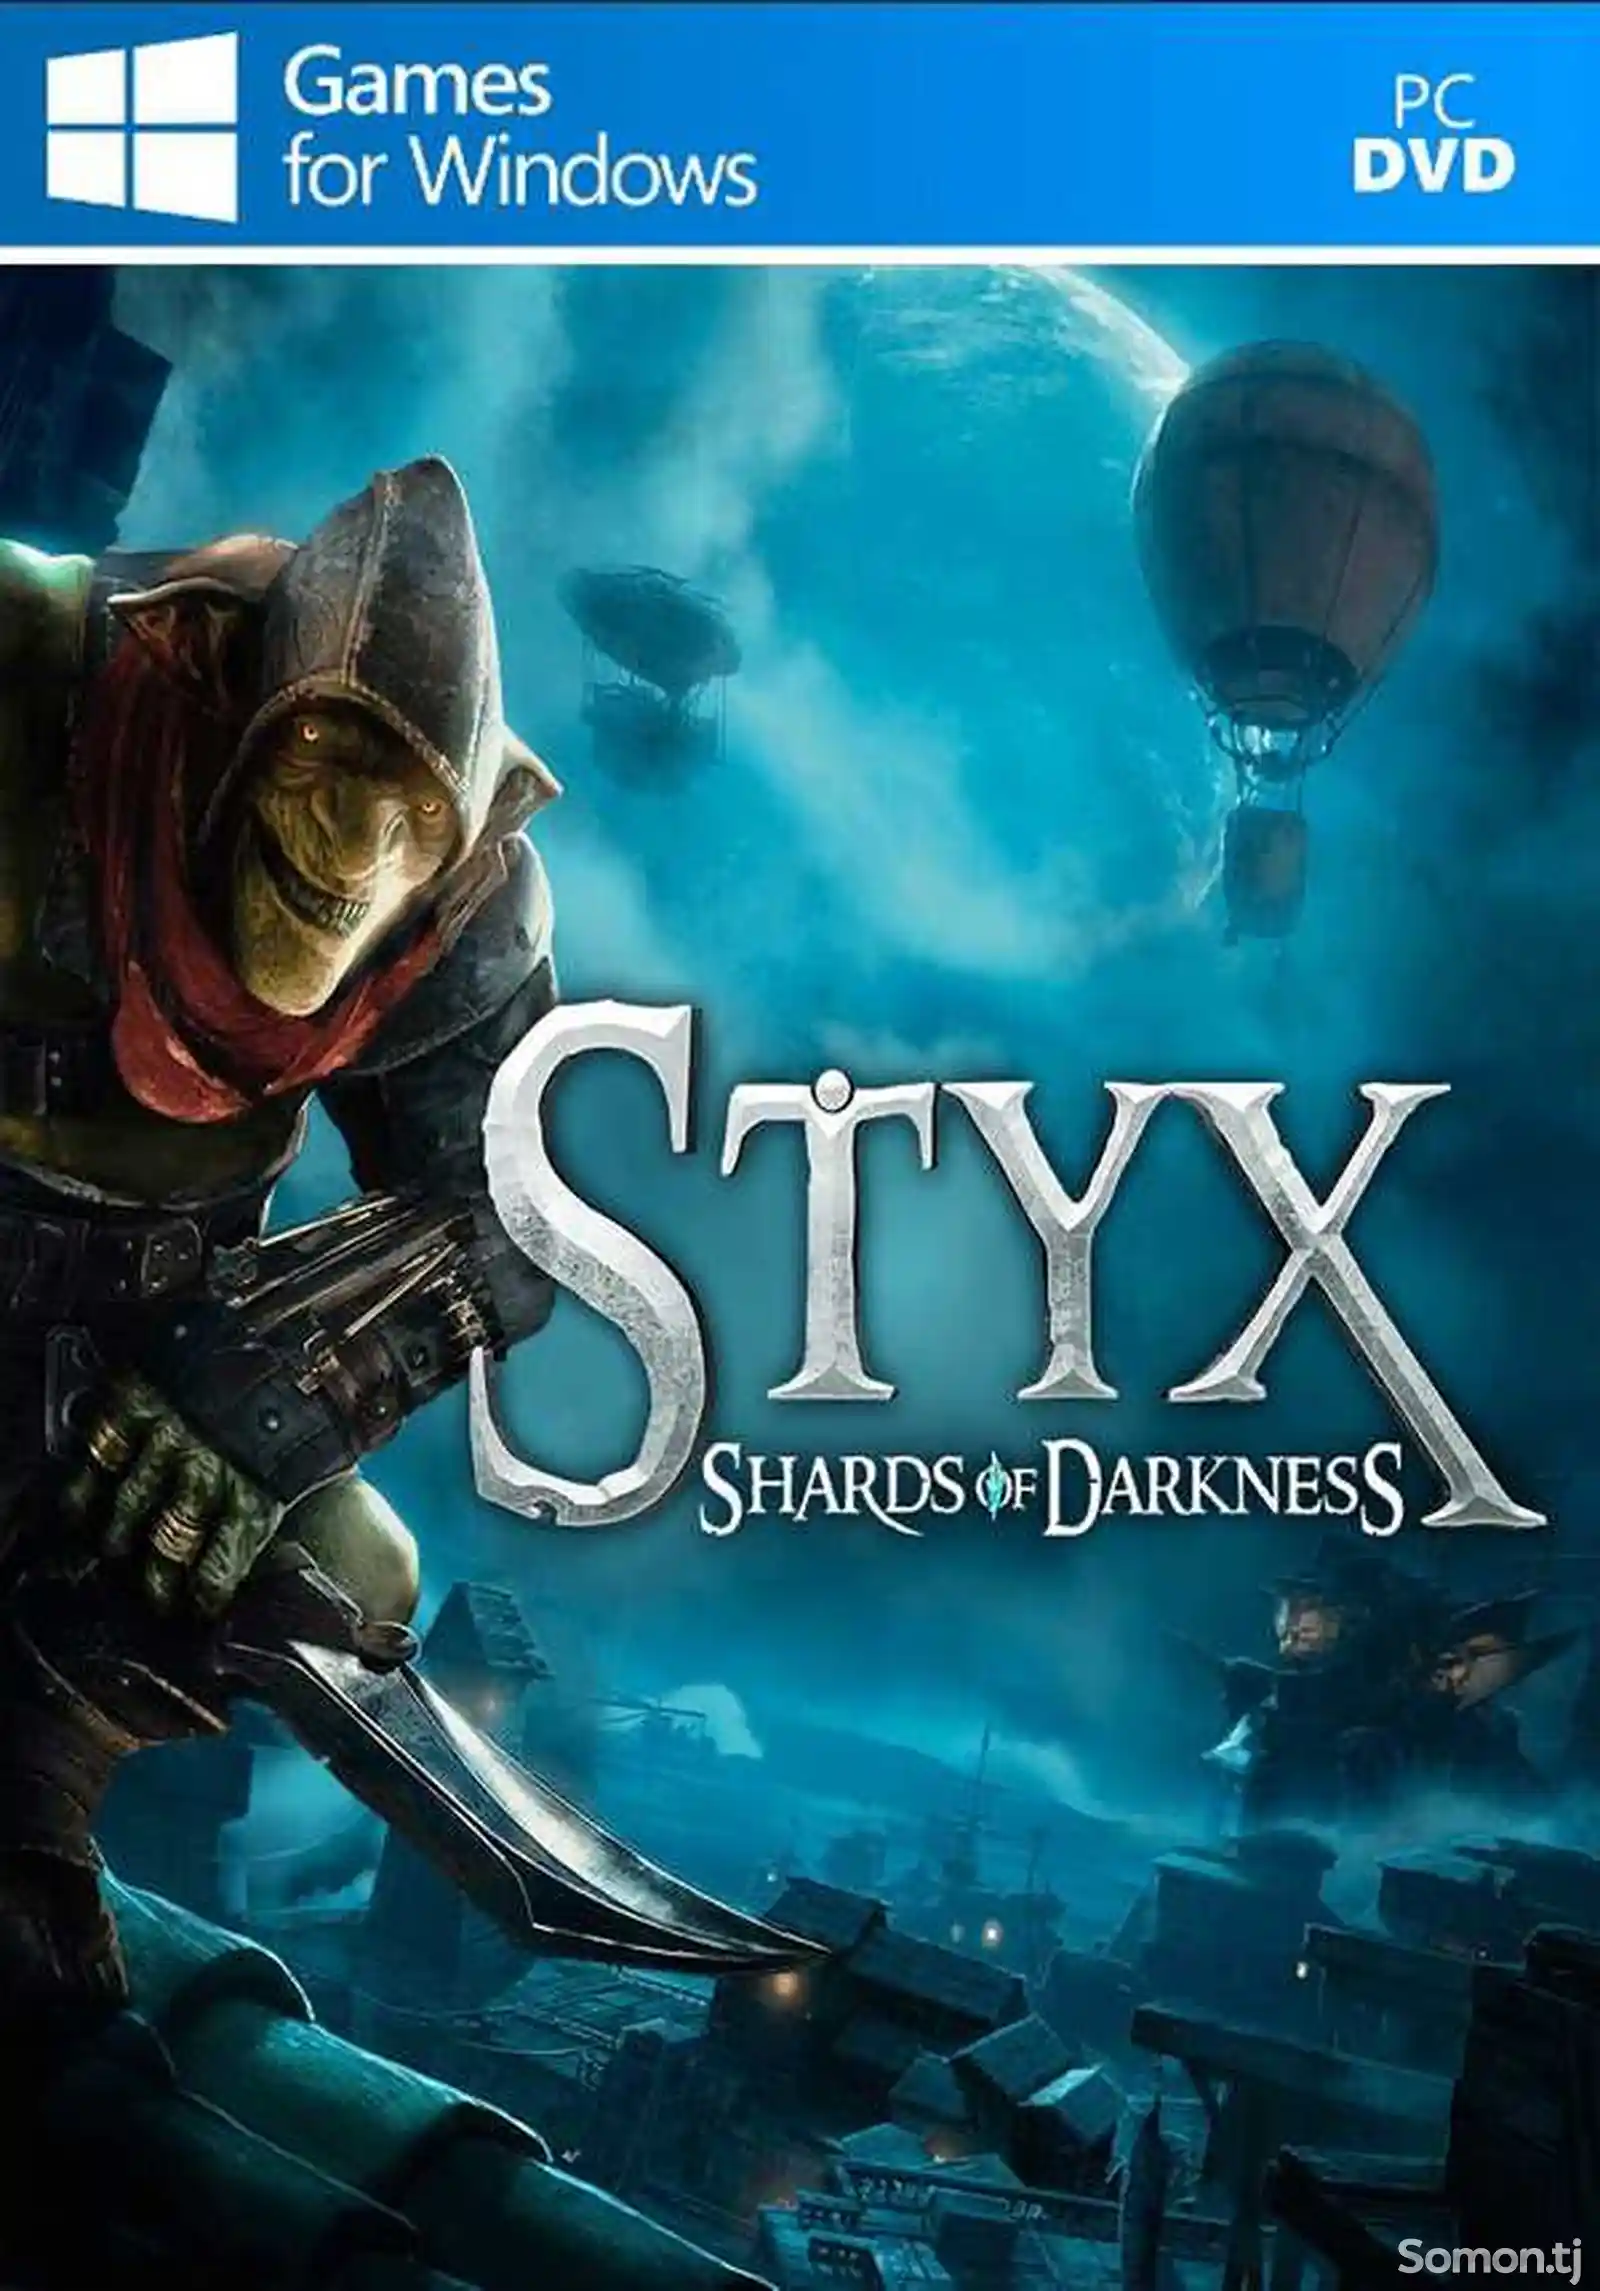 Игра Styx shards of darkness для компьютера-пк-pc-1